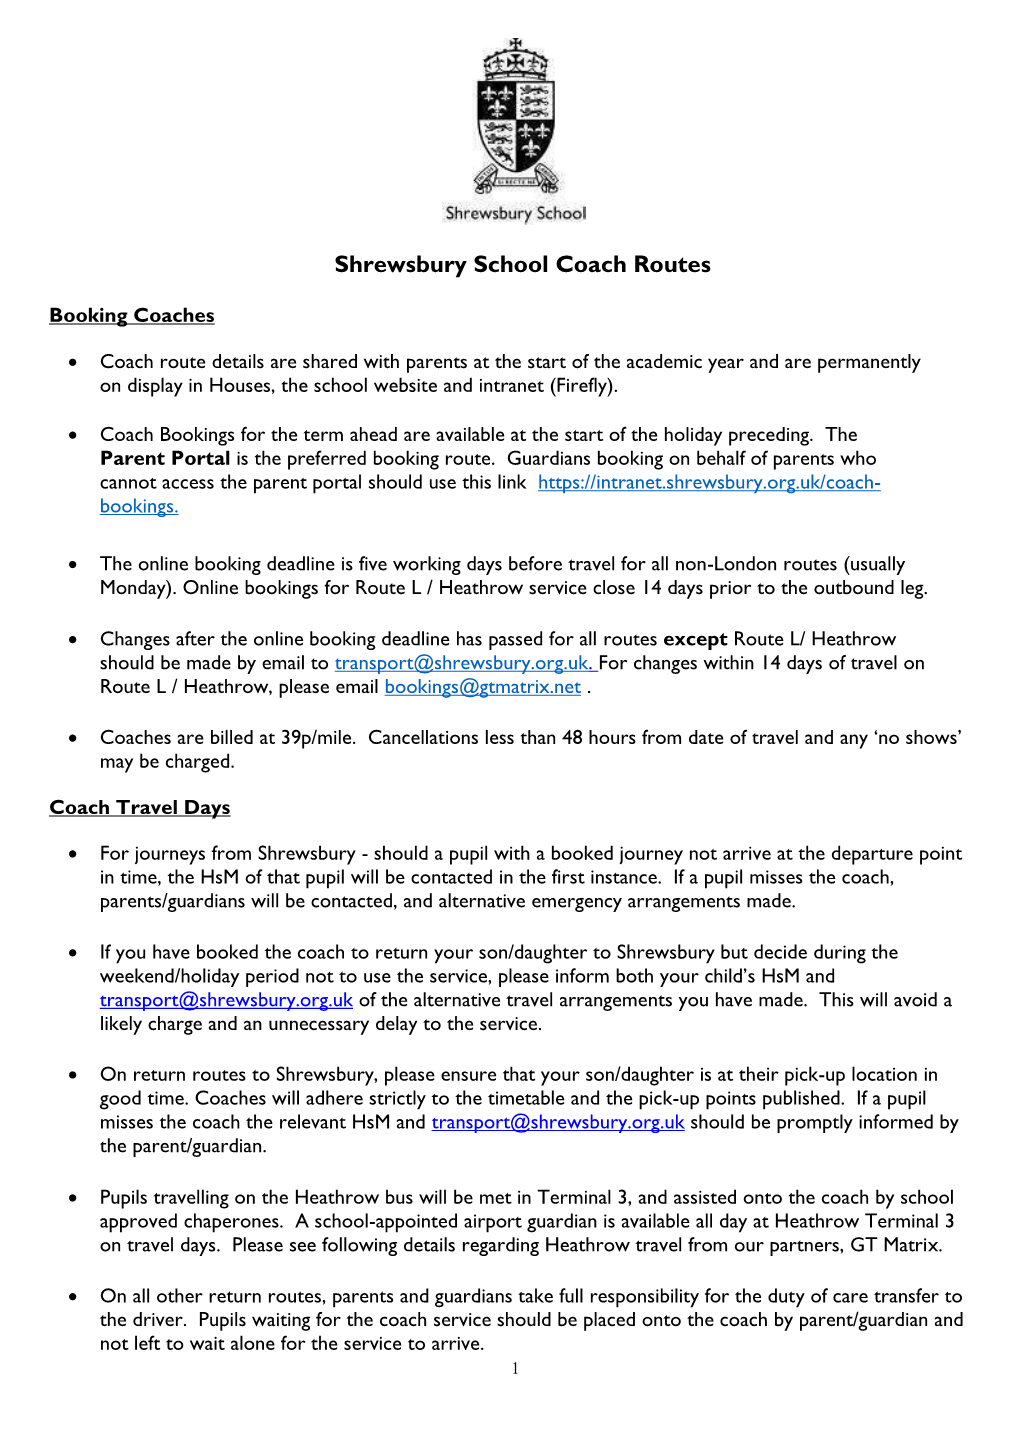 Shrewsbury School Coach Routes